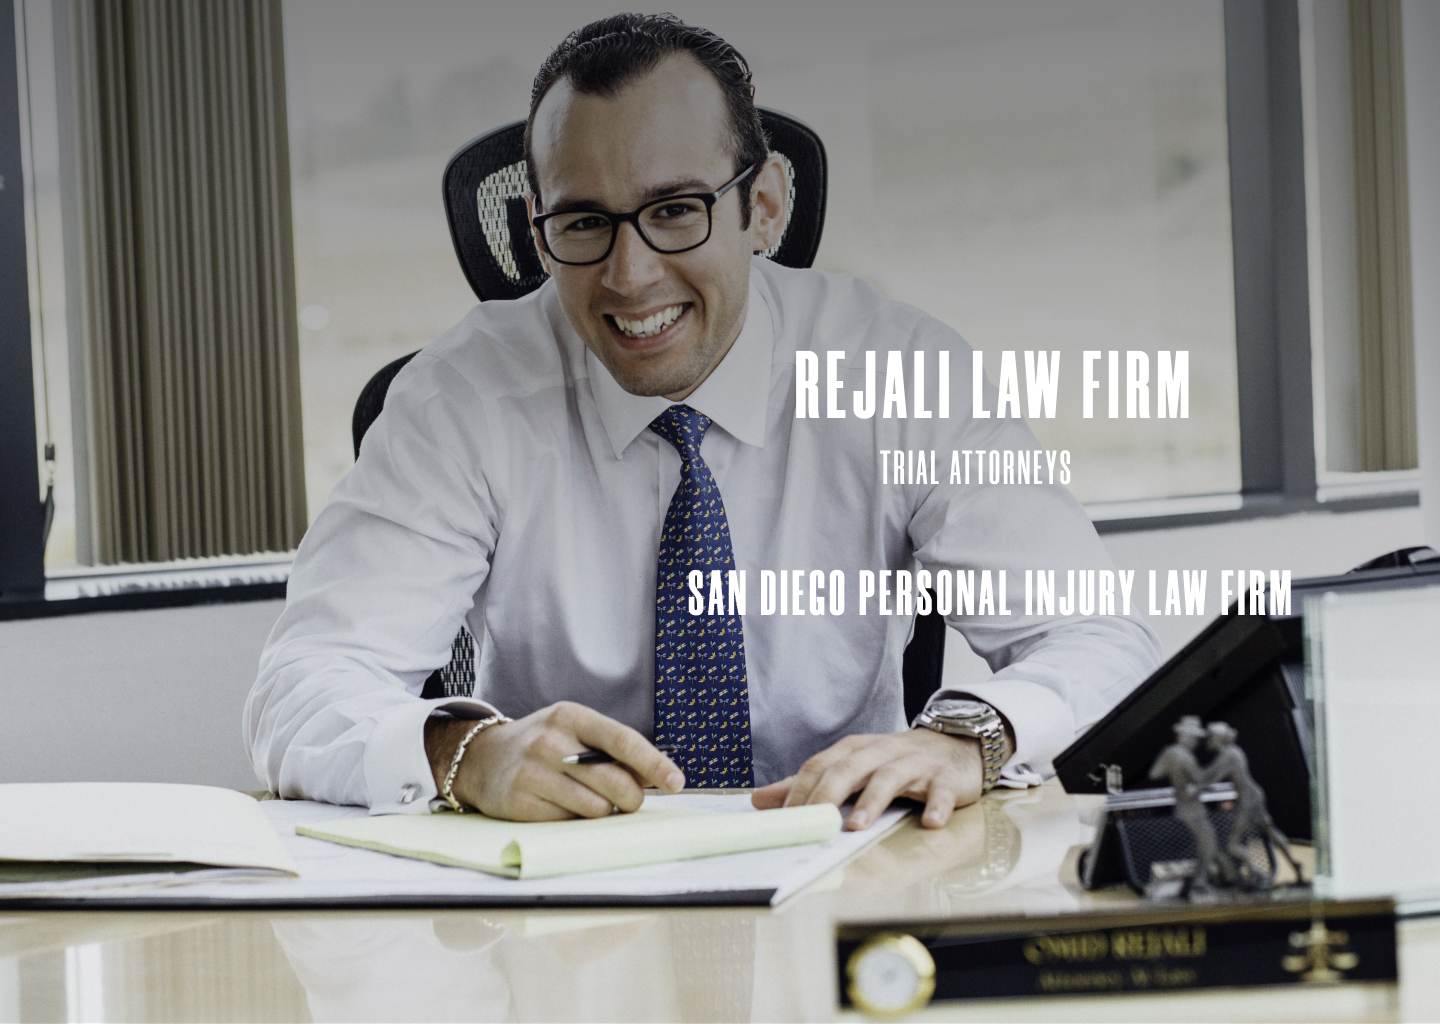 Personal Injury Lawyer San Diego | Personal Injury Law Firm San Diego |San Diego Personal Injury Lawyer | Rejali Law Firm